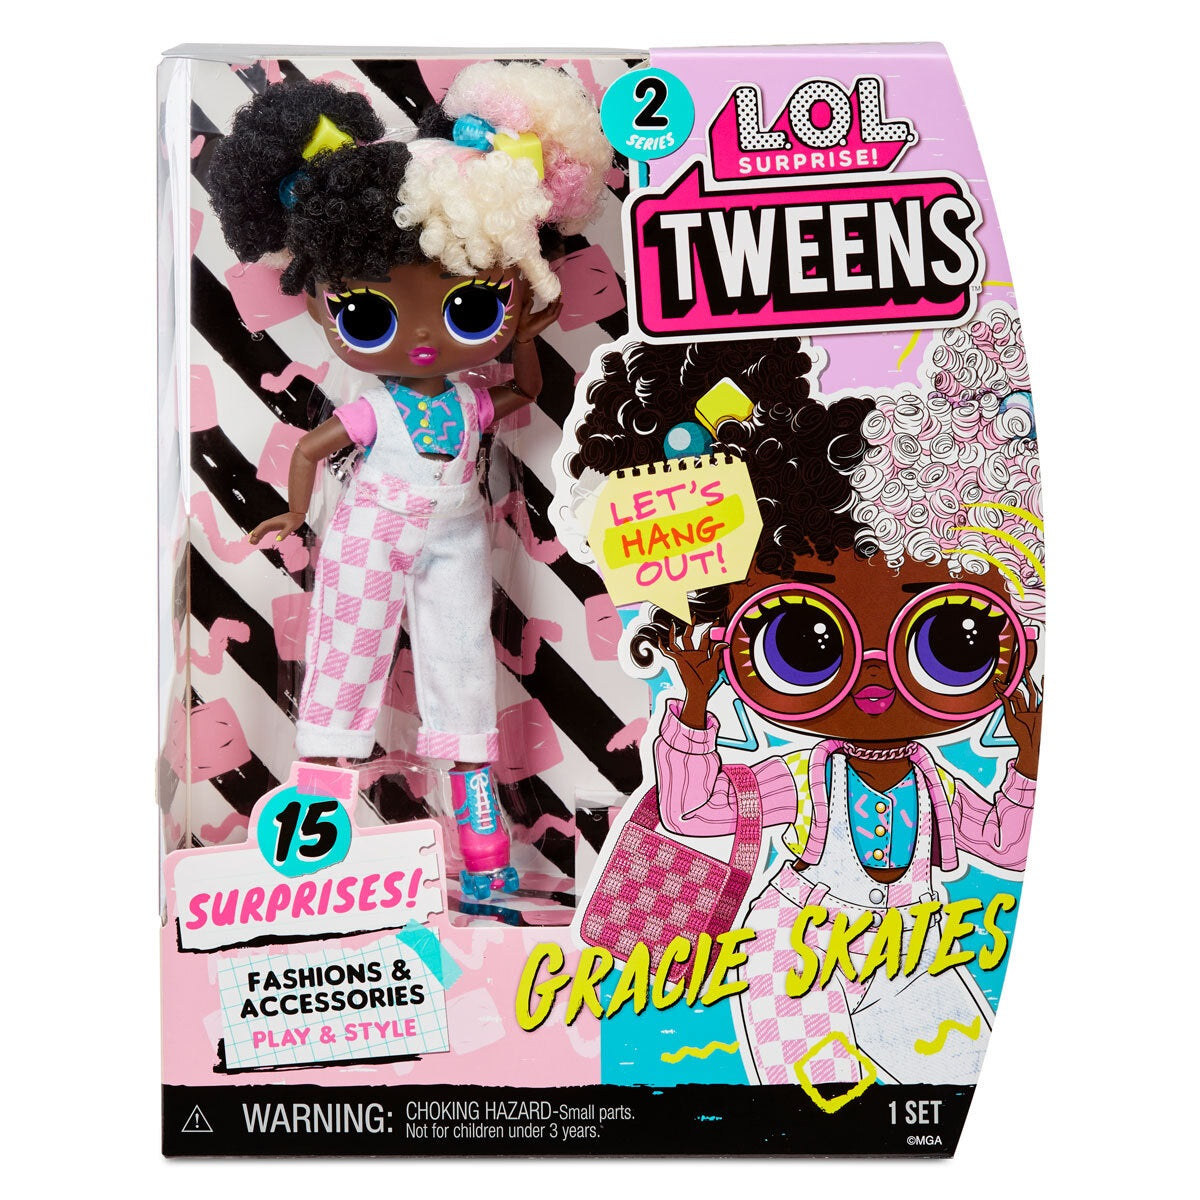 L.O.L Surprise! Tweens Doll - Gracie Skates